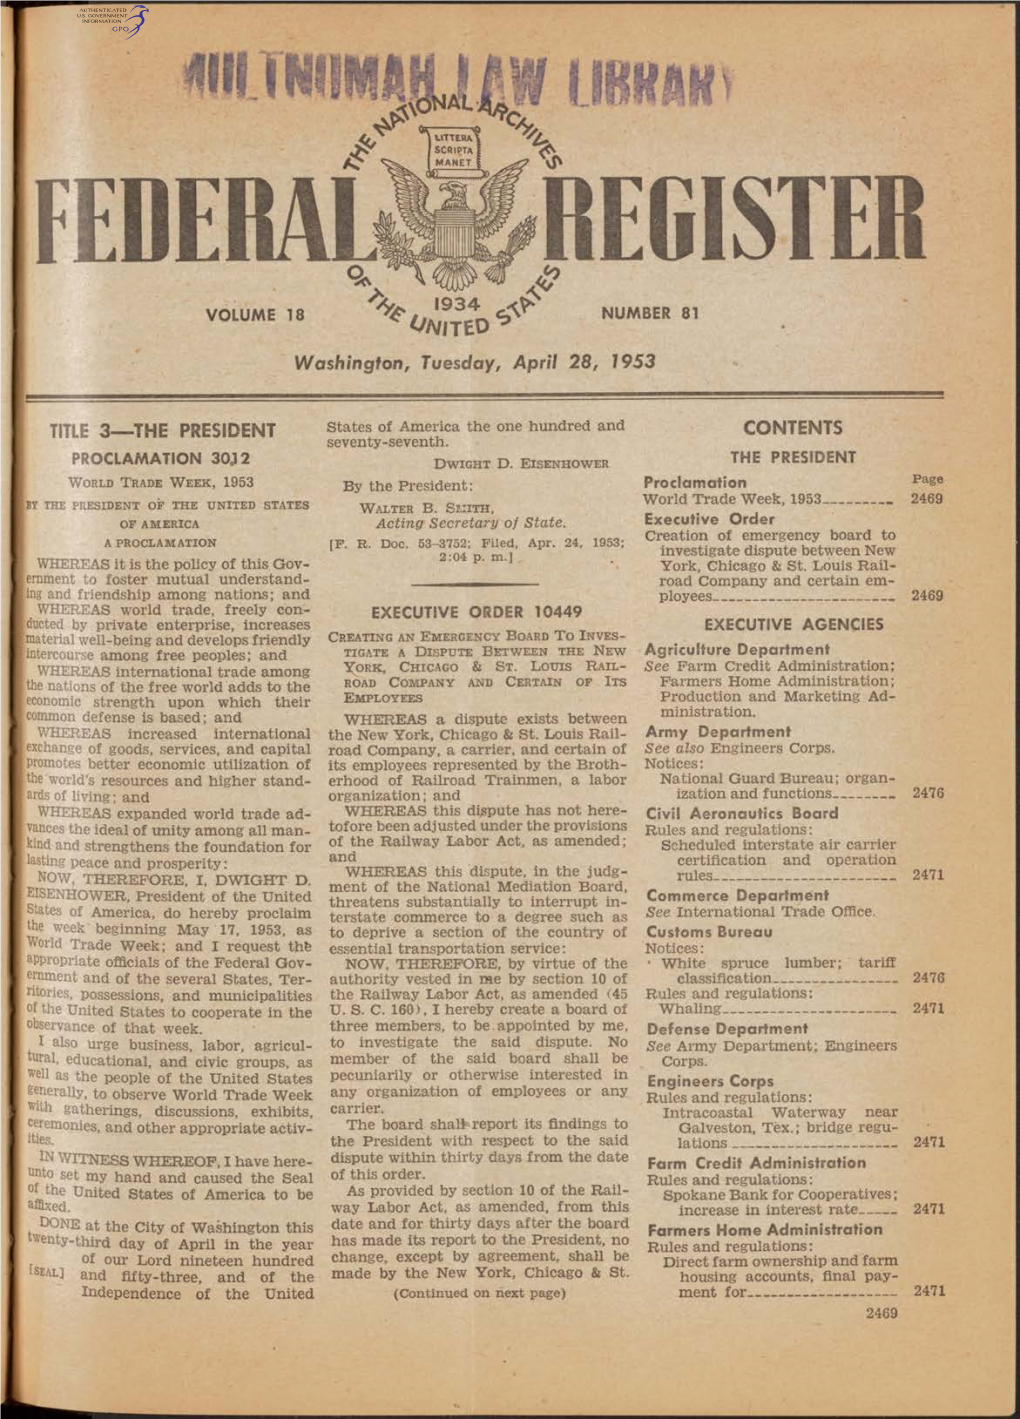 Washington, Tuesday, April 28, 1953 TITLE 3—THE PRESIDENT CONTENTS